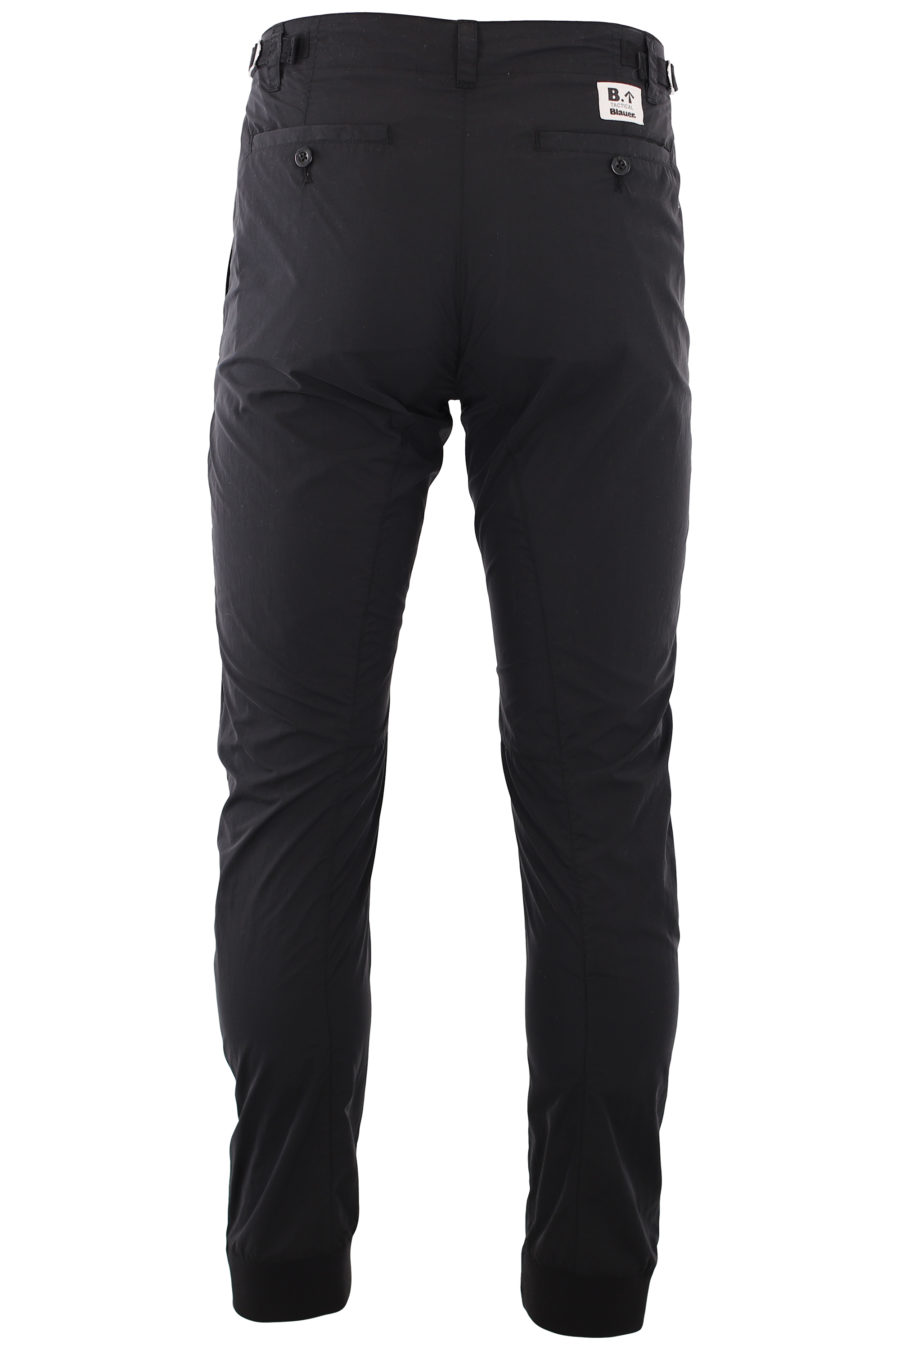 Pantalón largo "Tactical" color negro - IMG 1433